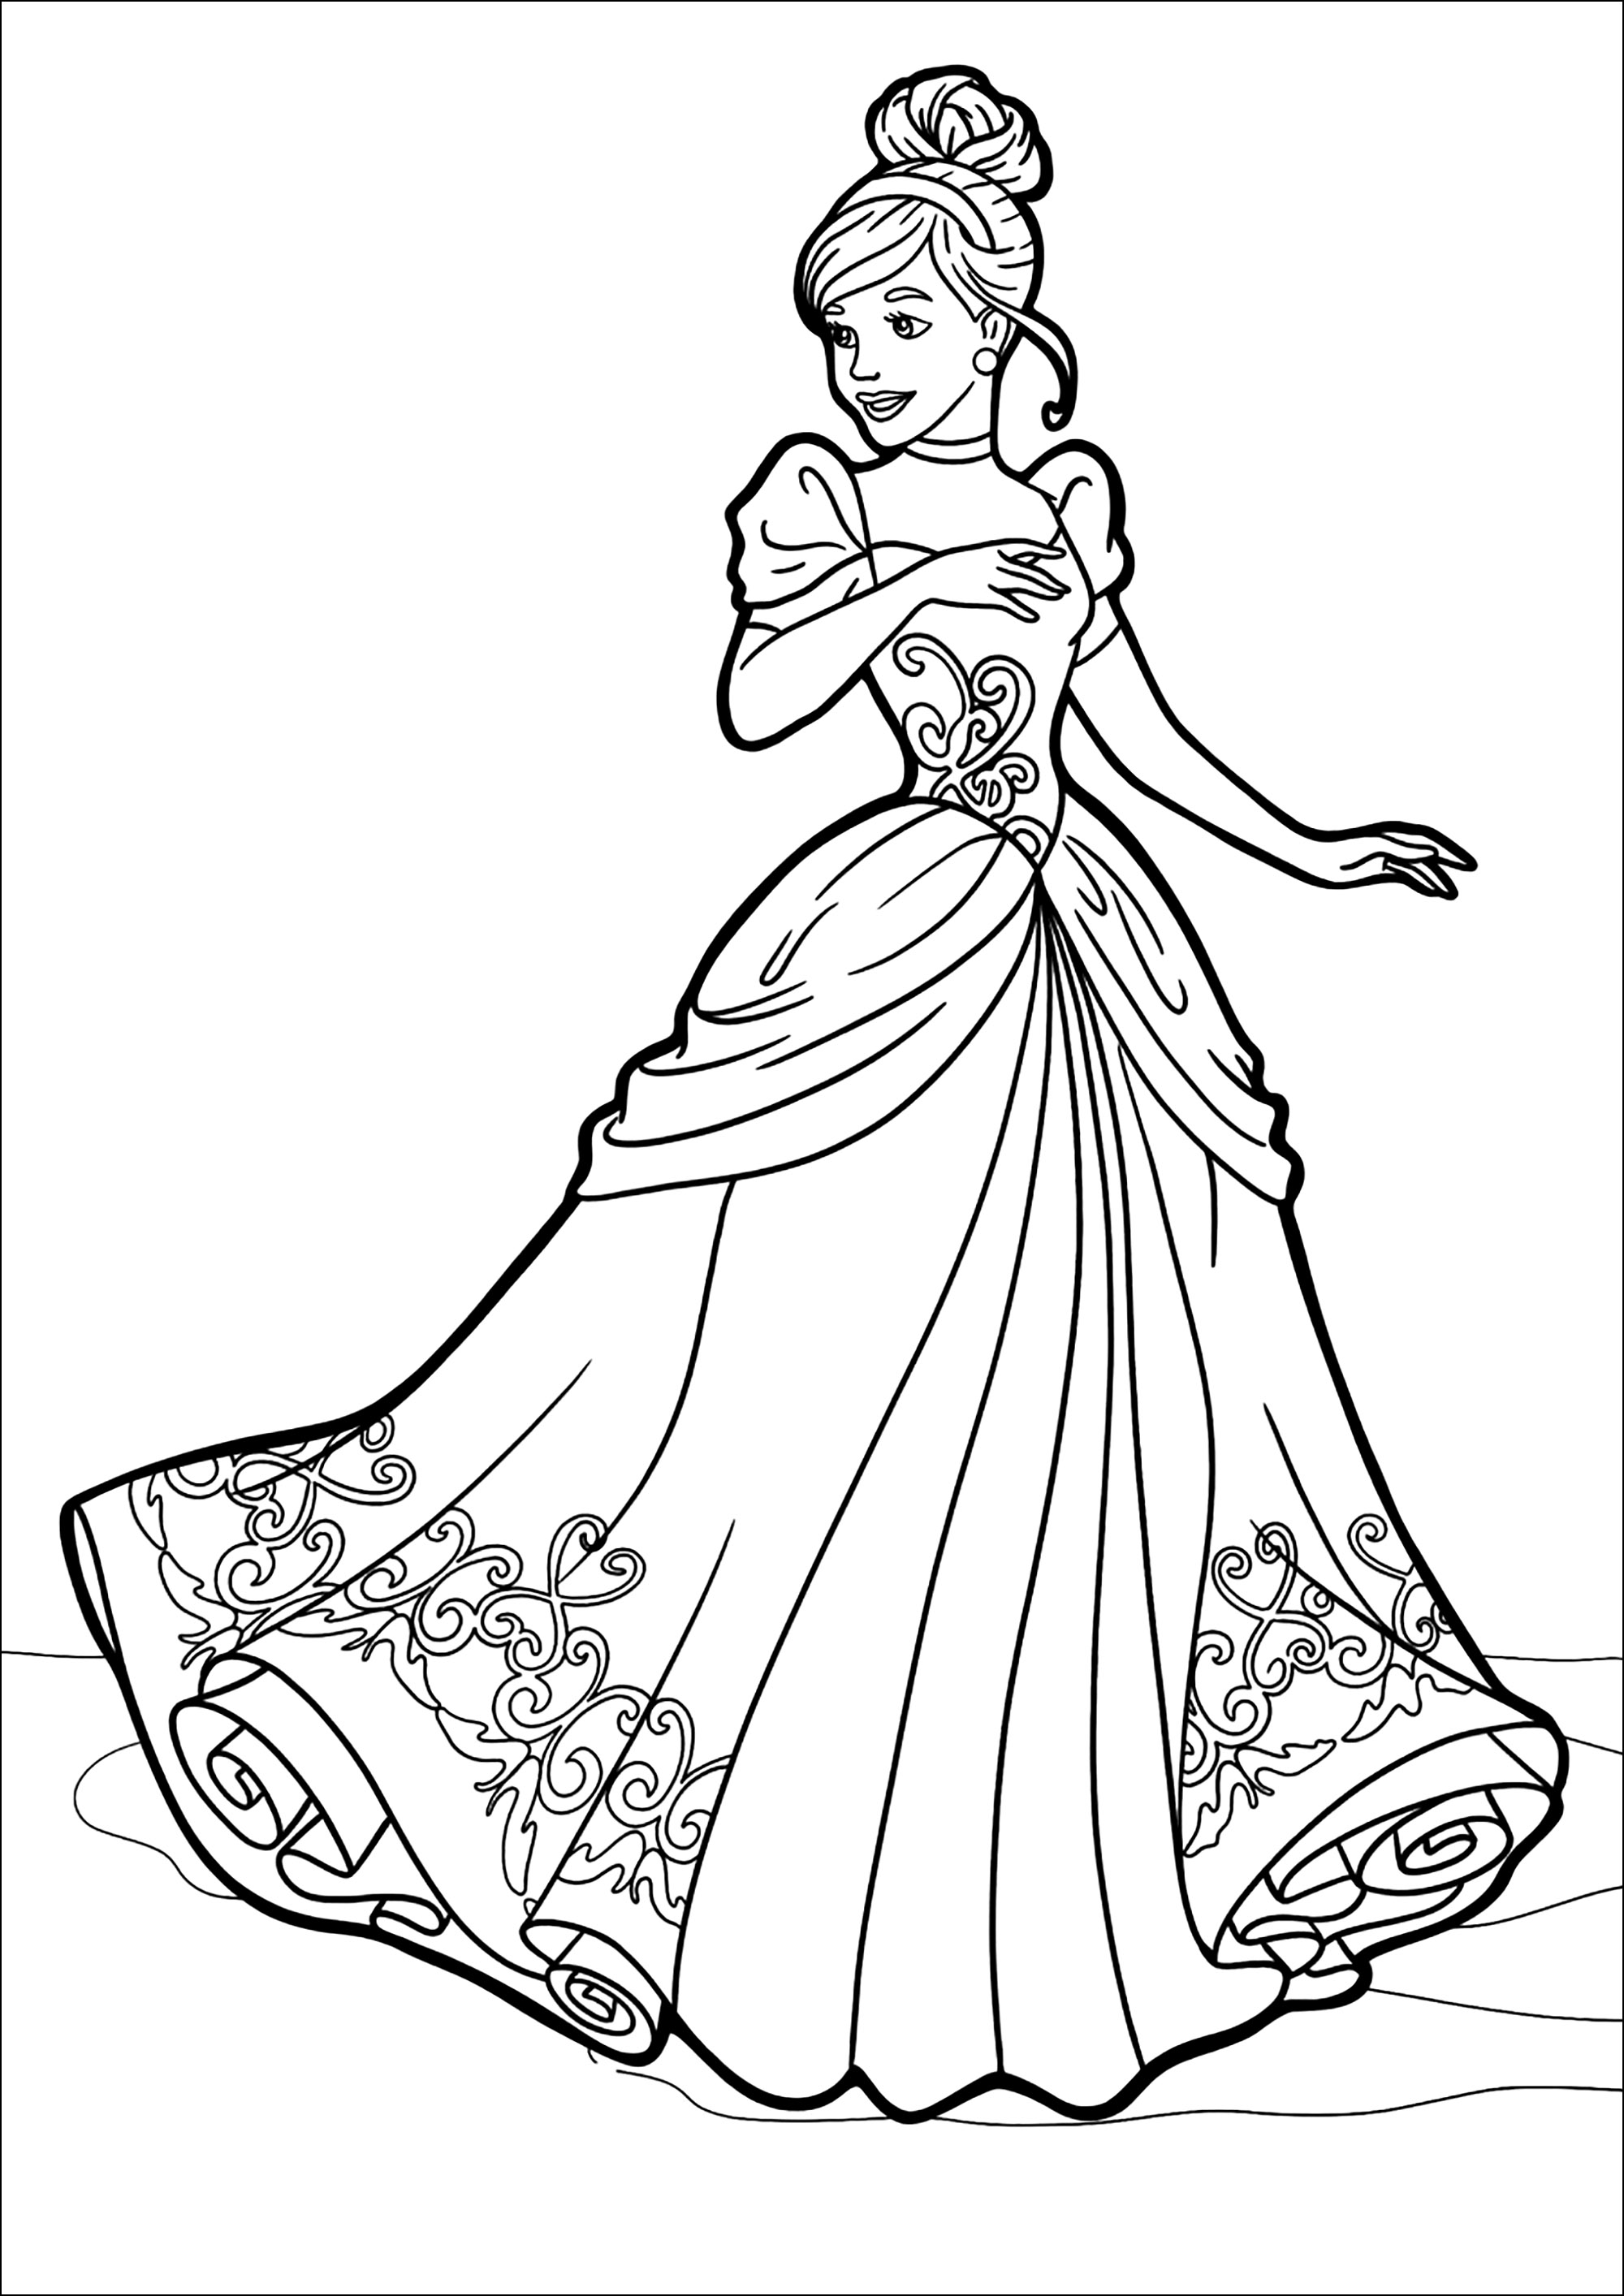 Free Cinderella Drawings, Download Free Cinderella Drawings png images,  Free ClipArts on Clipart Library